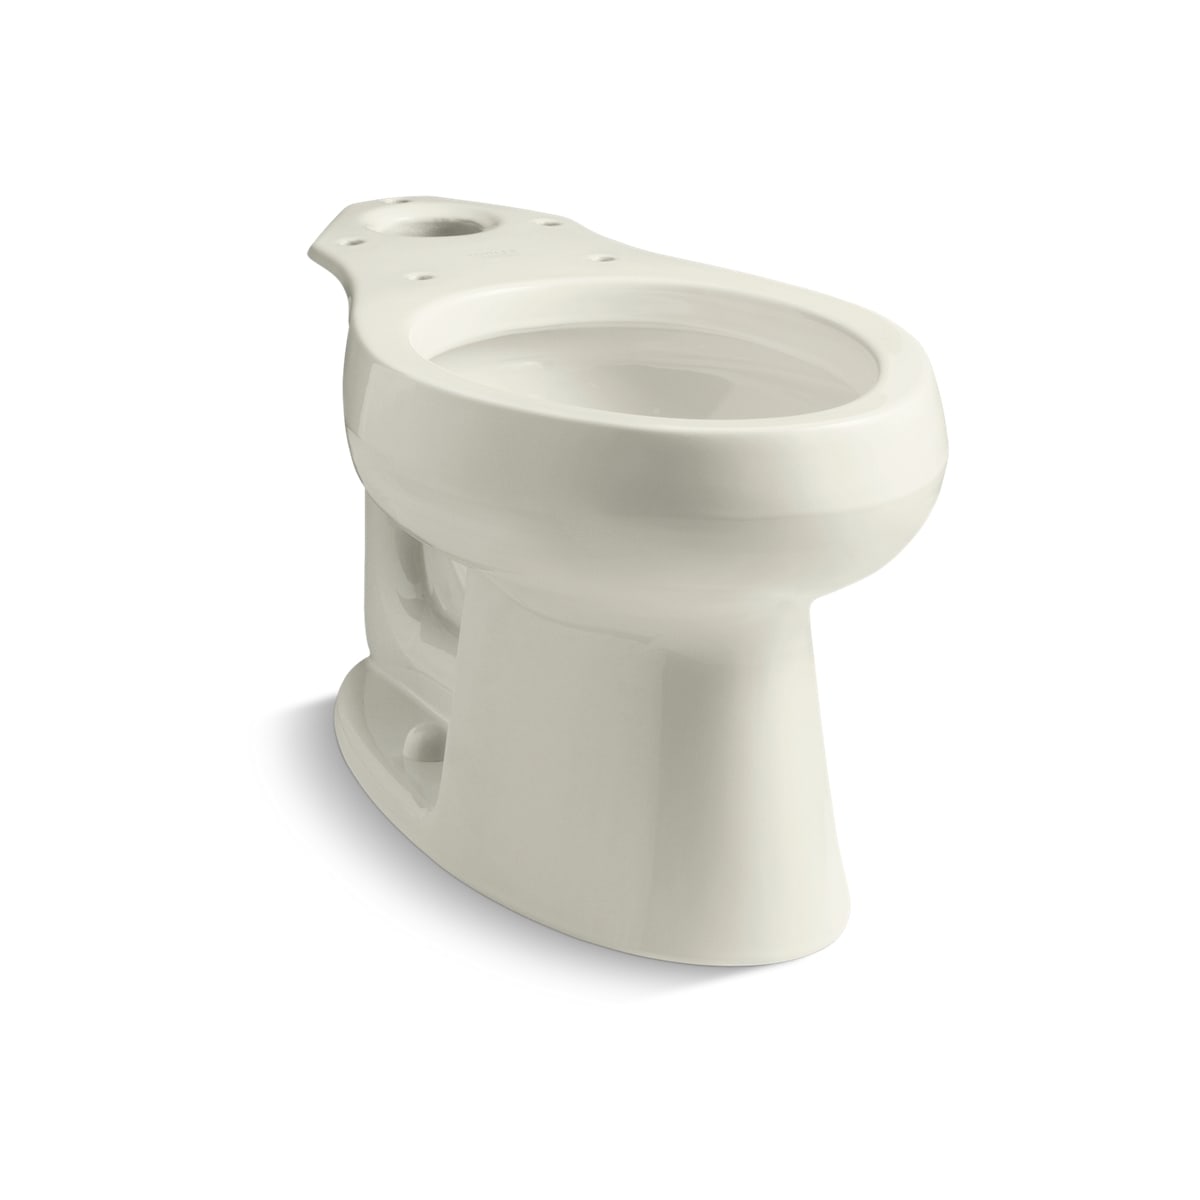 Kohler K-4198-96 Wellworth Elongated Toilet Bowl - Less | Build.com